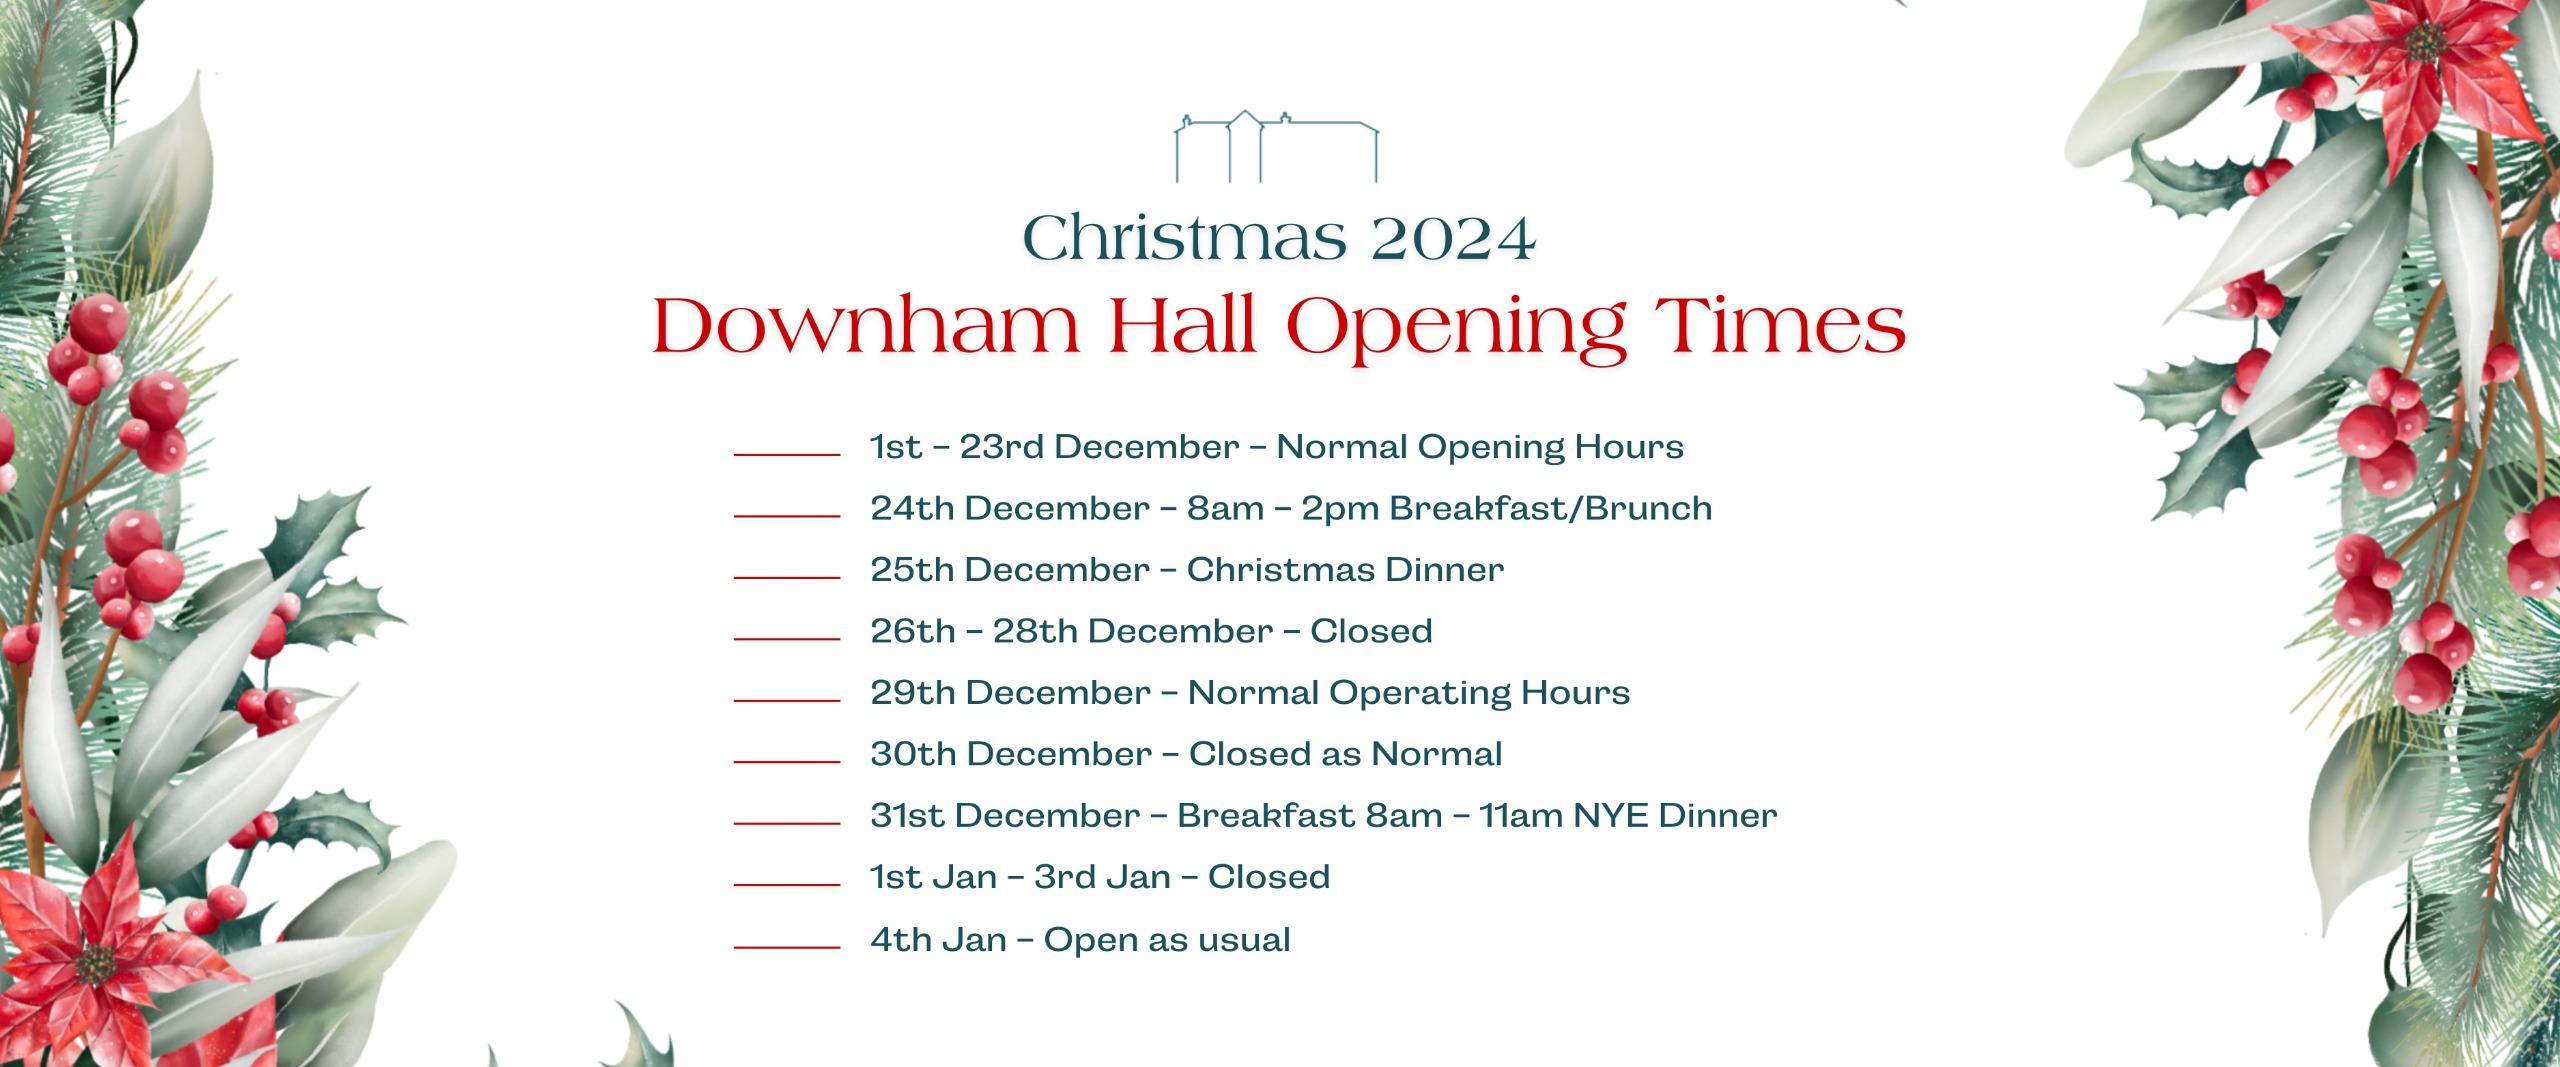 Christmas 2024 - Downham Hall